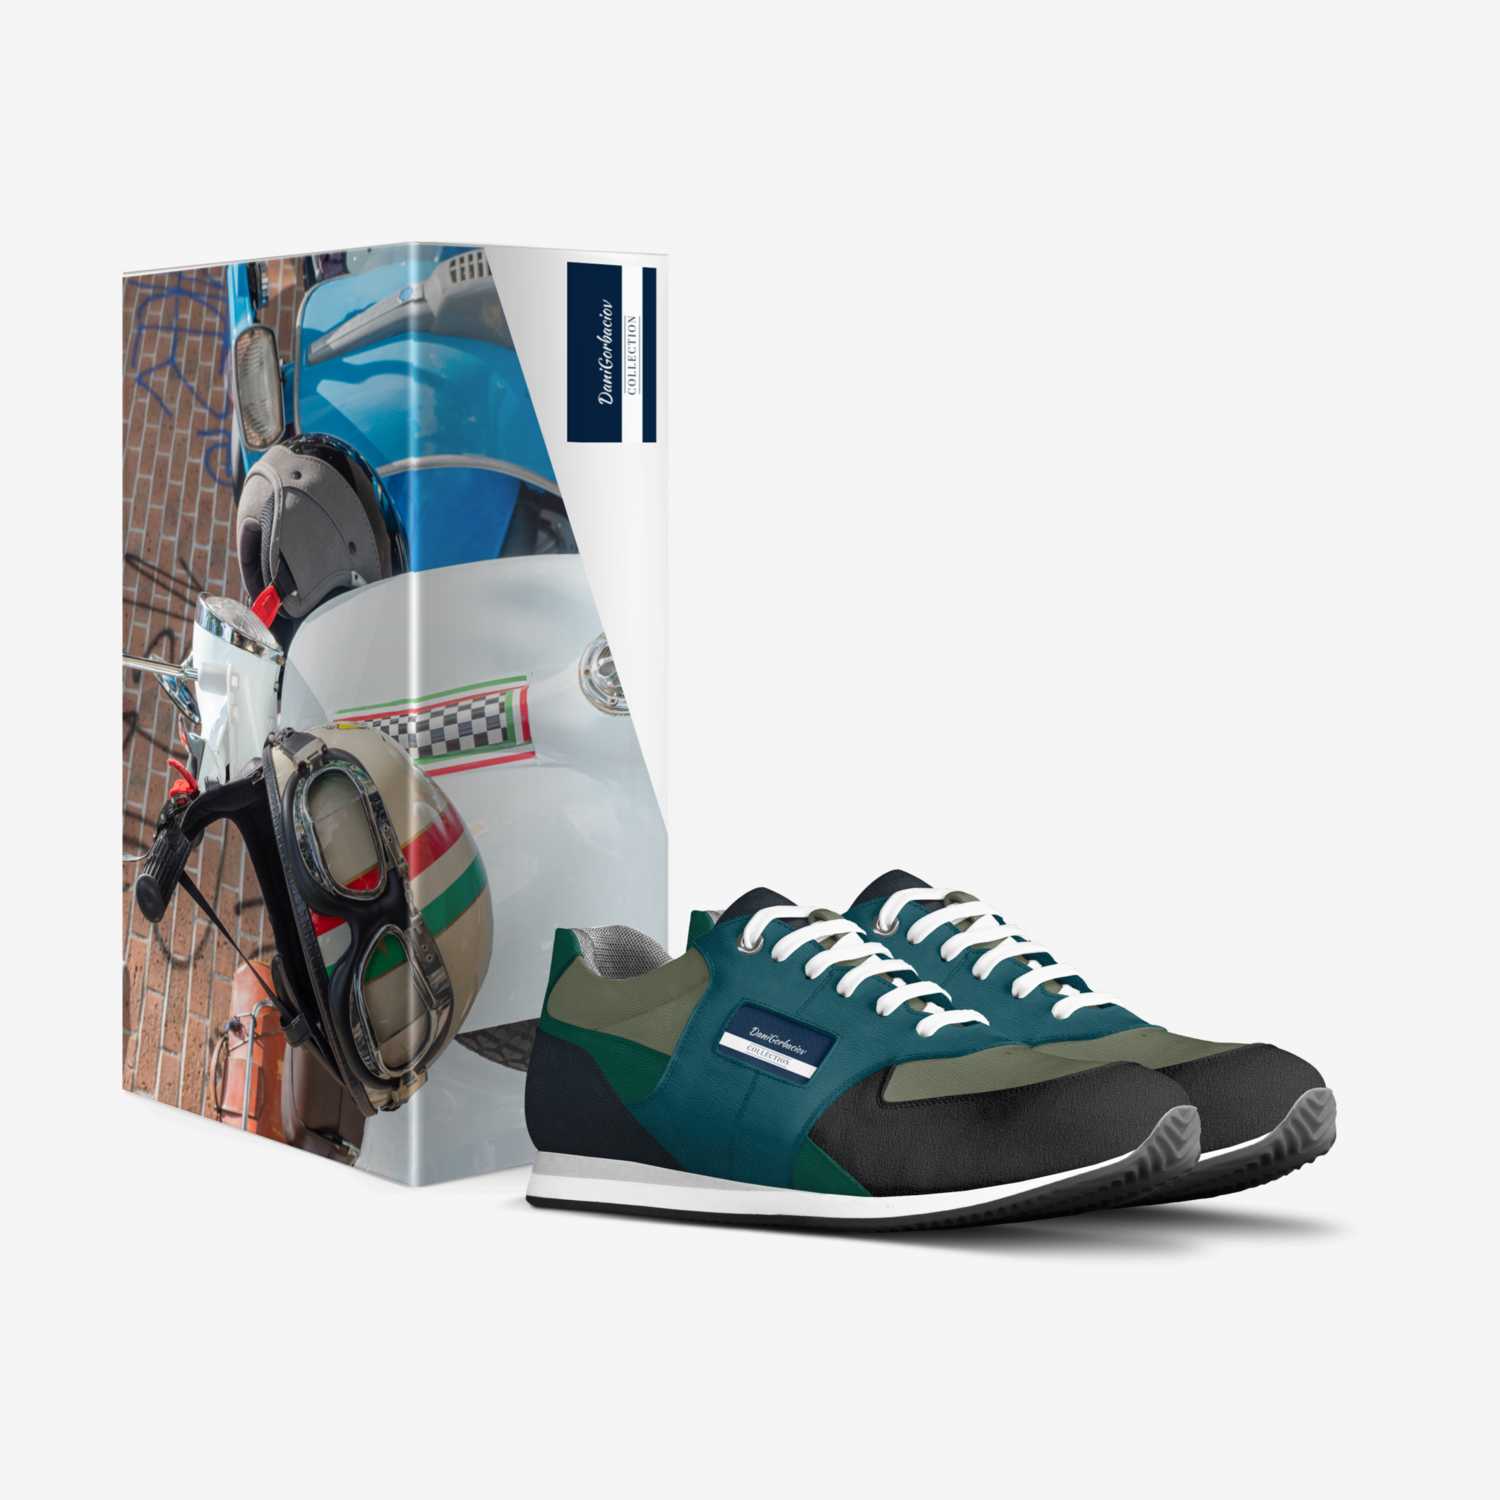 DaniGorbaciov custom made in Italy shoes by Dani Gorbaciov | Box view